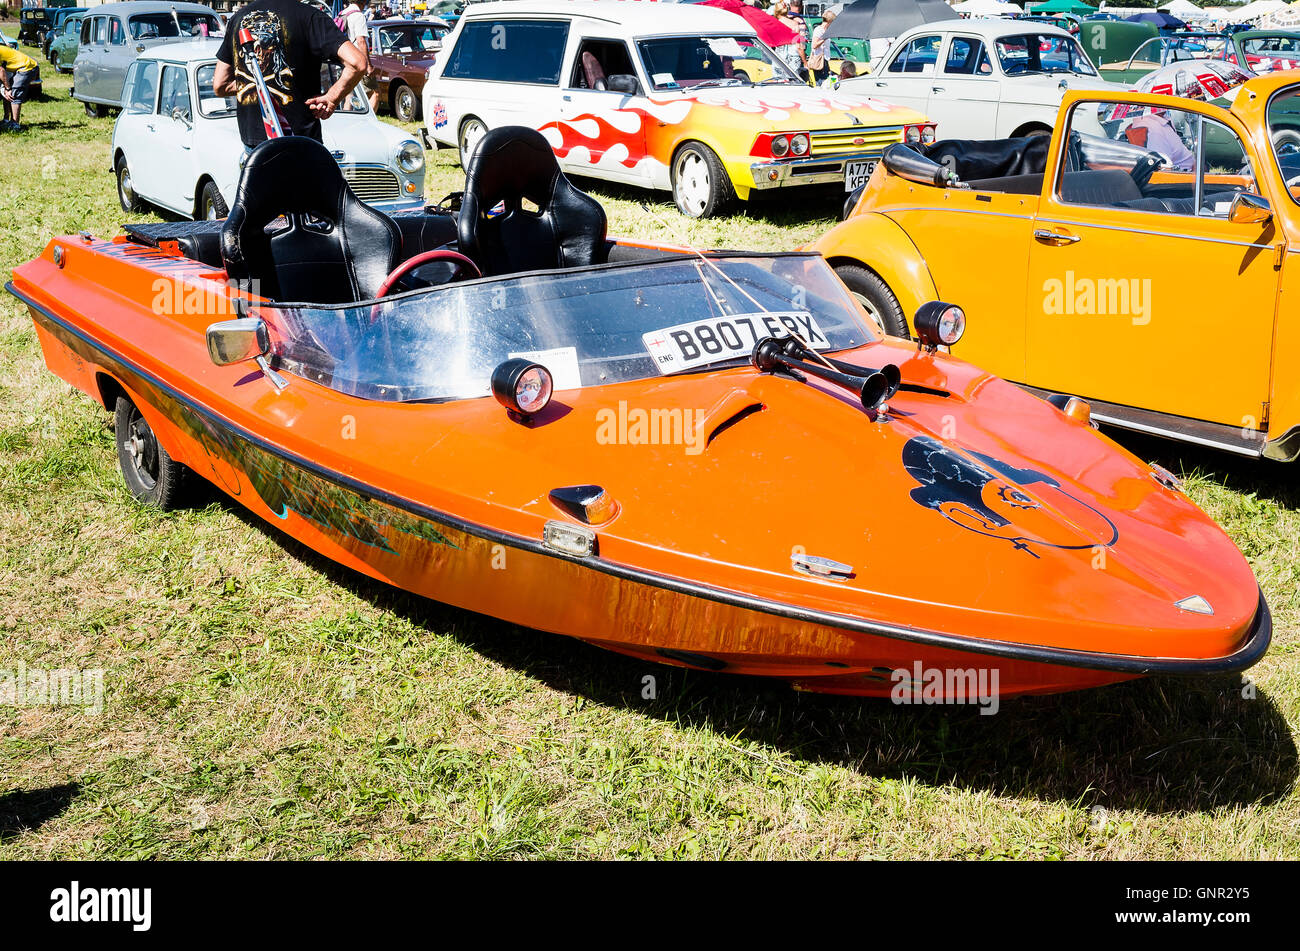 A Renauilt boat car called Clockwork Orange at an English show Stock Photo